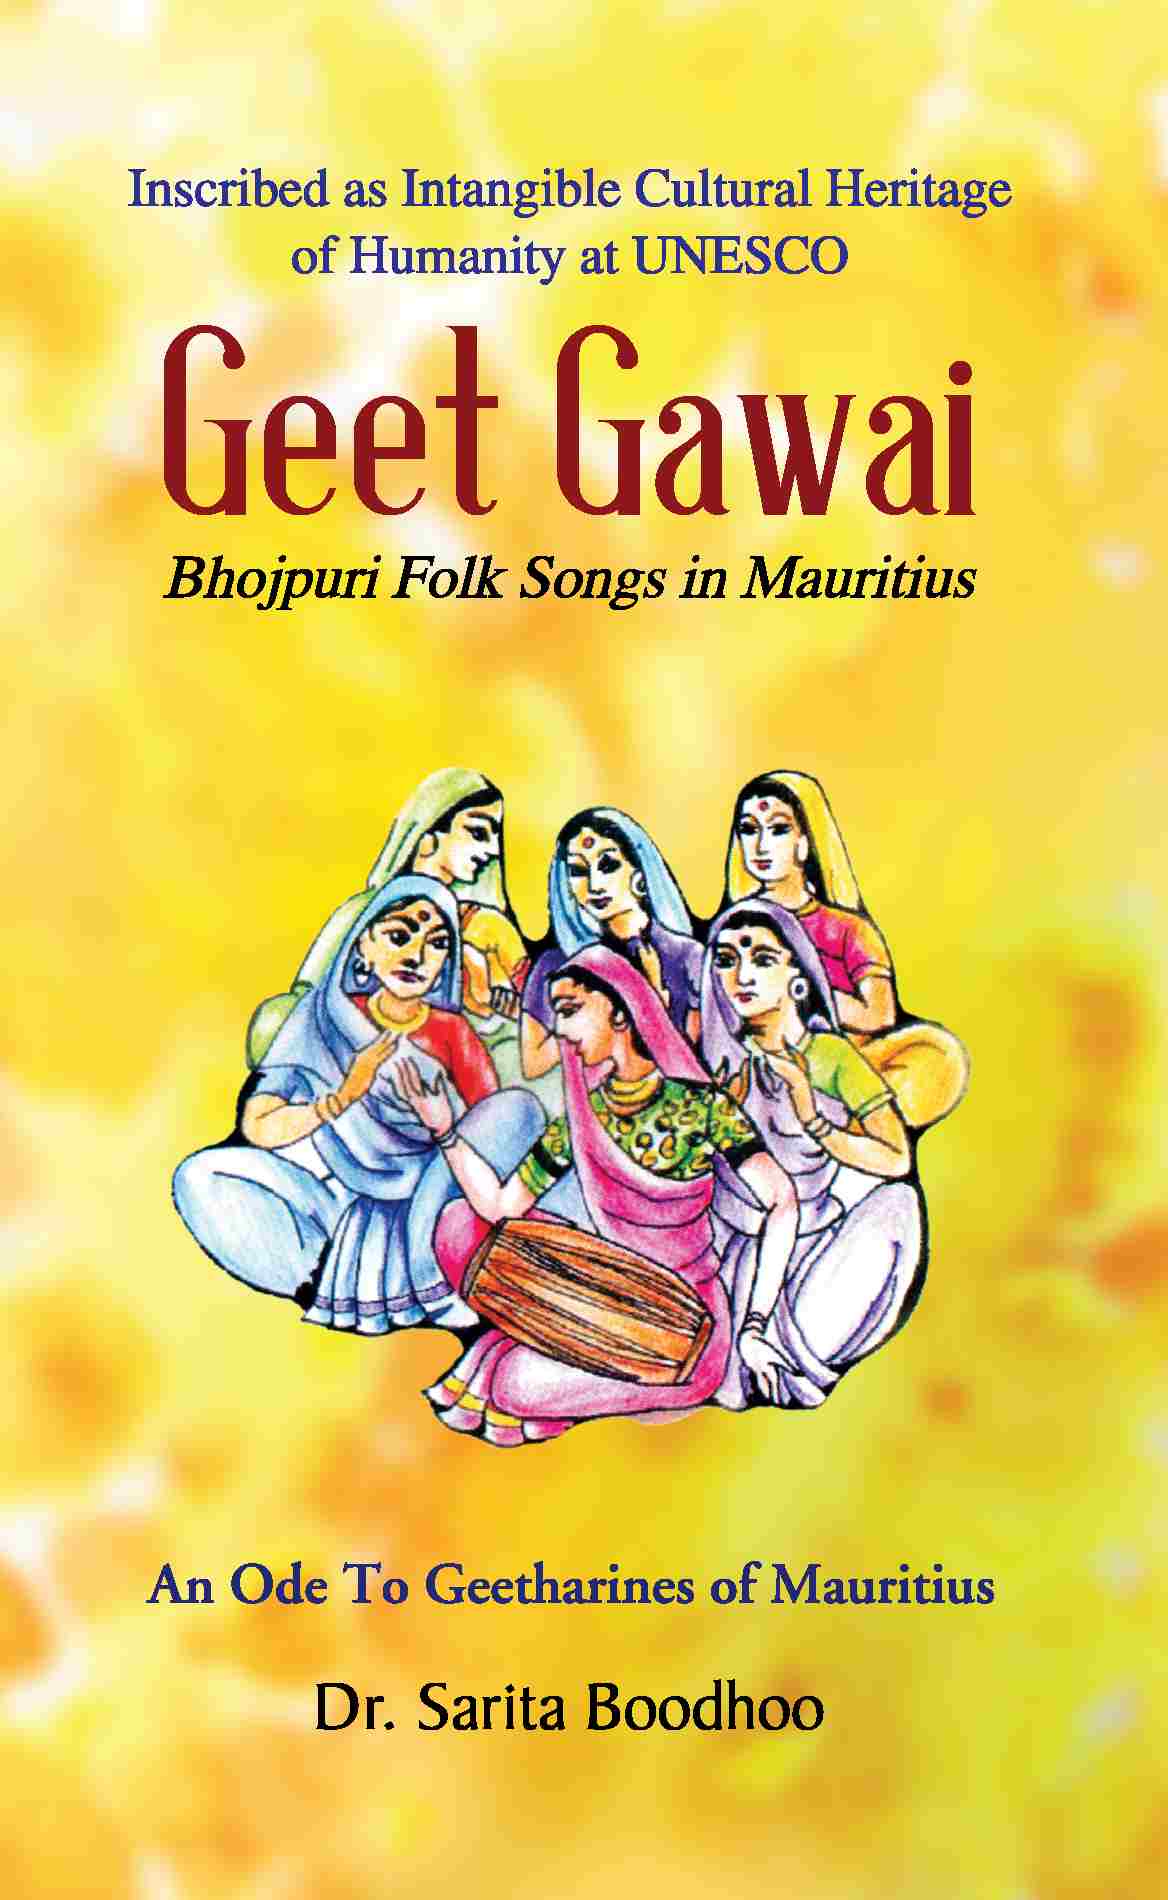 Geet Gawai (Bhojpuri folk songs in Mauritius)